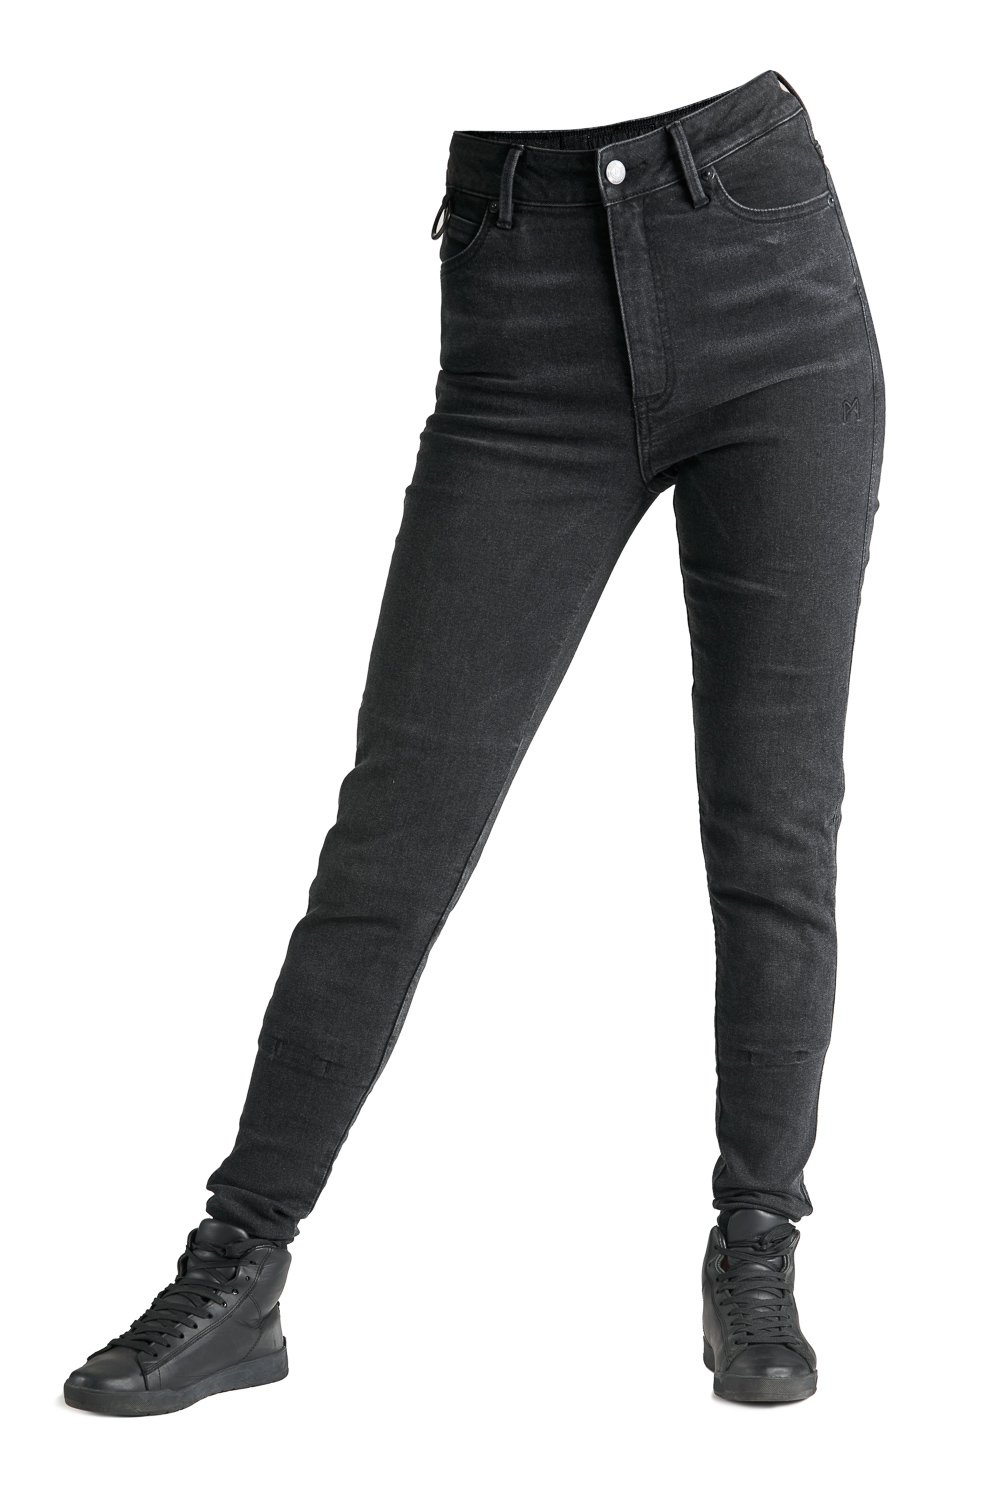 Image of Pando Moto Kusari Cor 01 Women Motorcycle Jeans Skinny-Fit Cordura Size W24/L32 EN